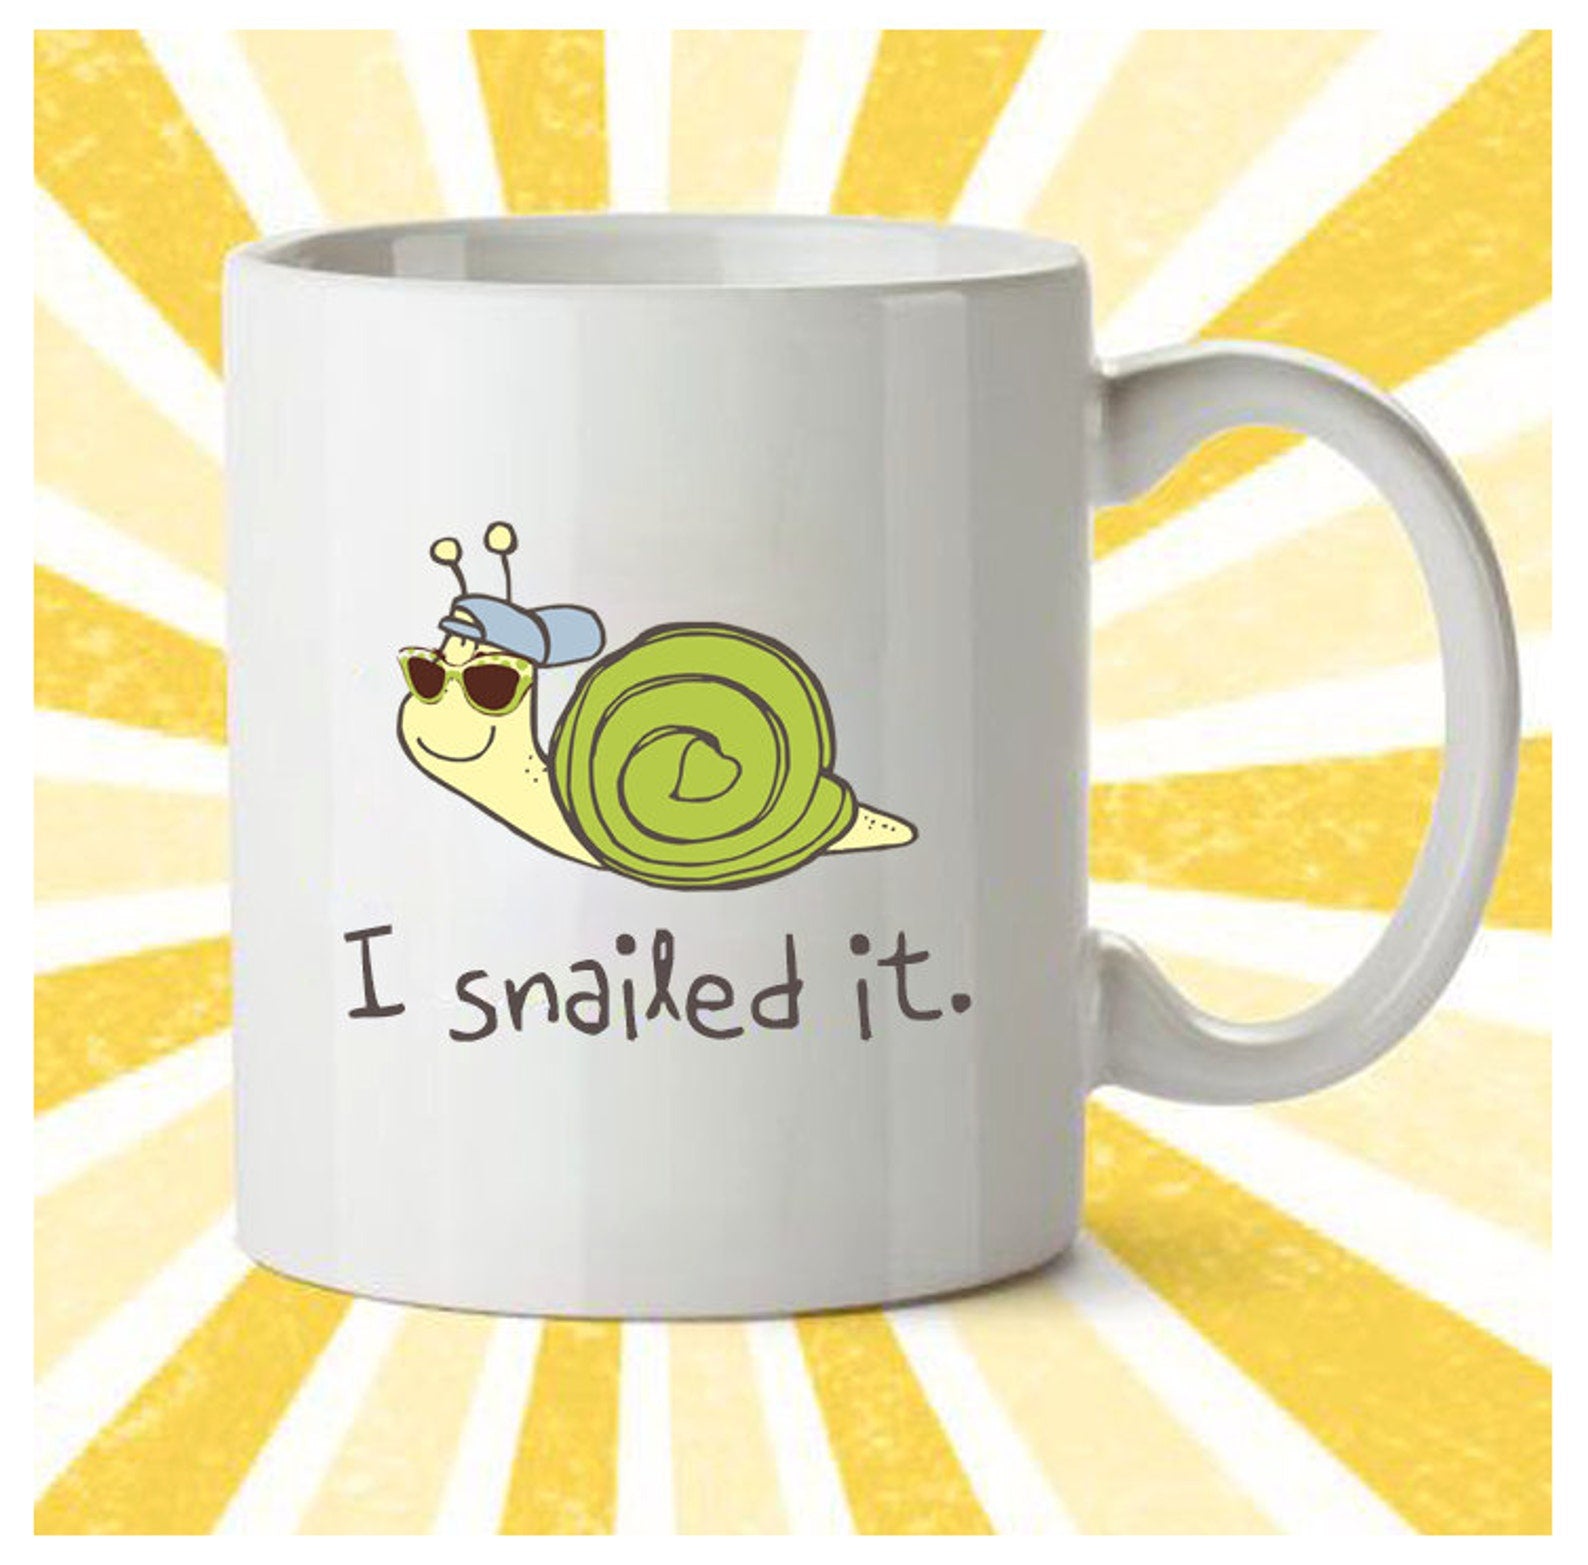 Snailed it - Mug (Set of 5 Piece)